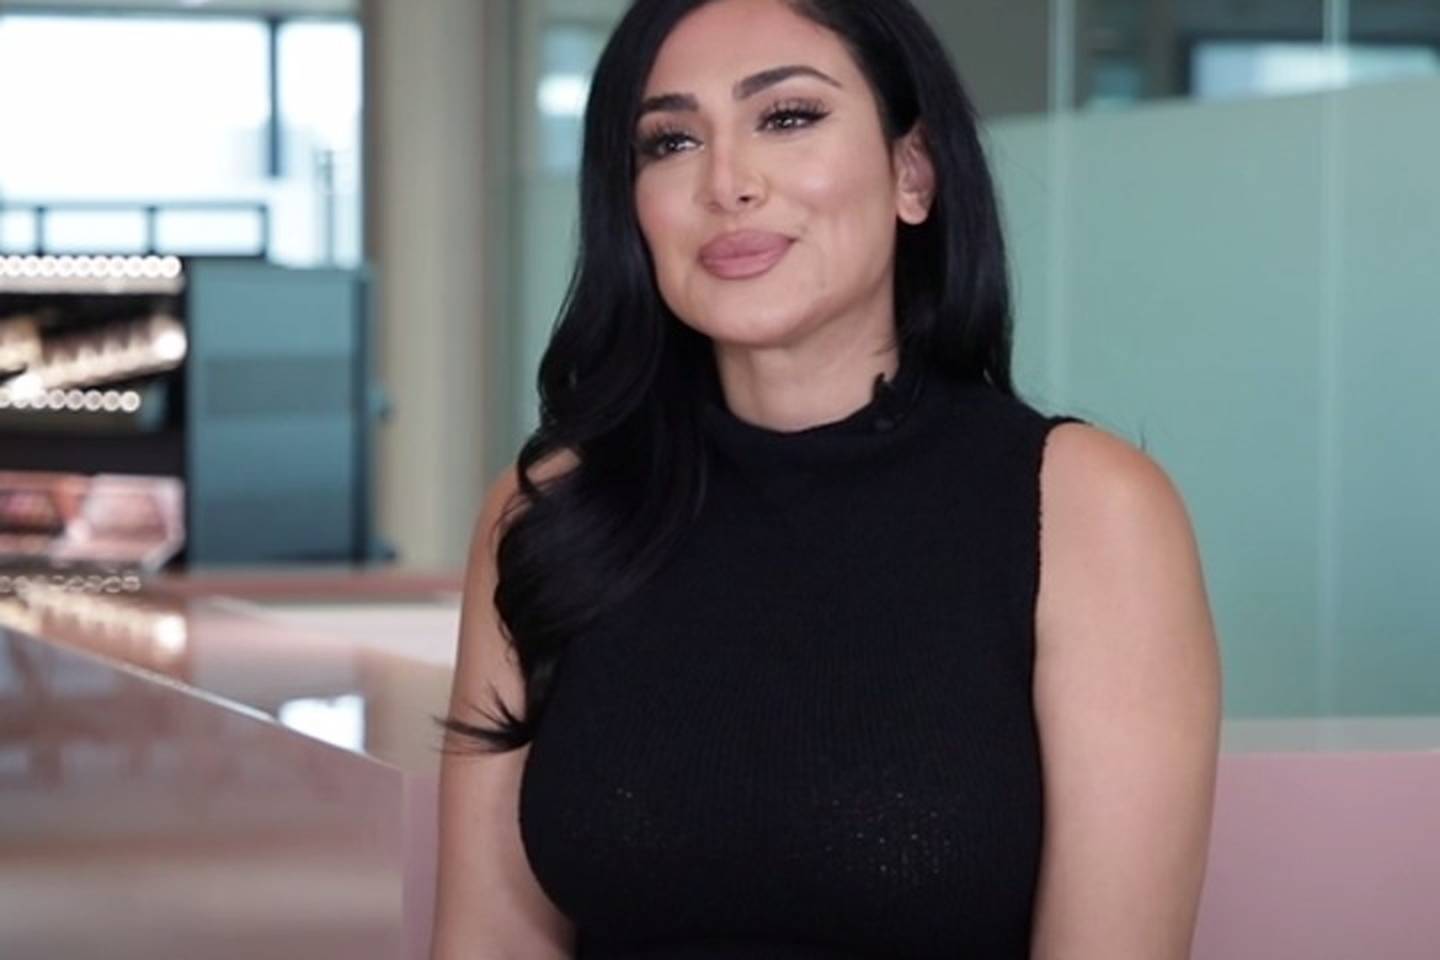 Huda Kattan's makeup line Huda Beauty valued at $1.2 billion